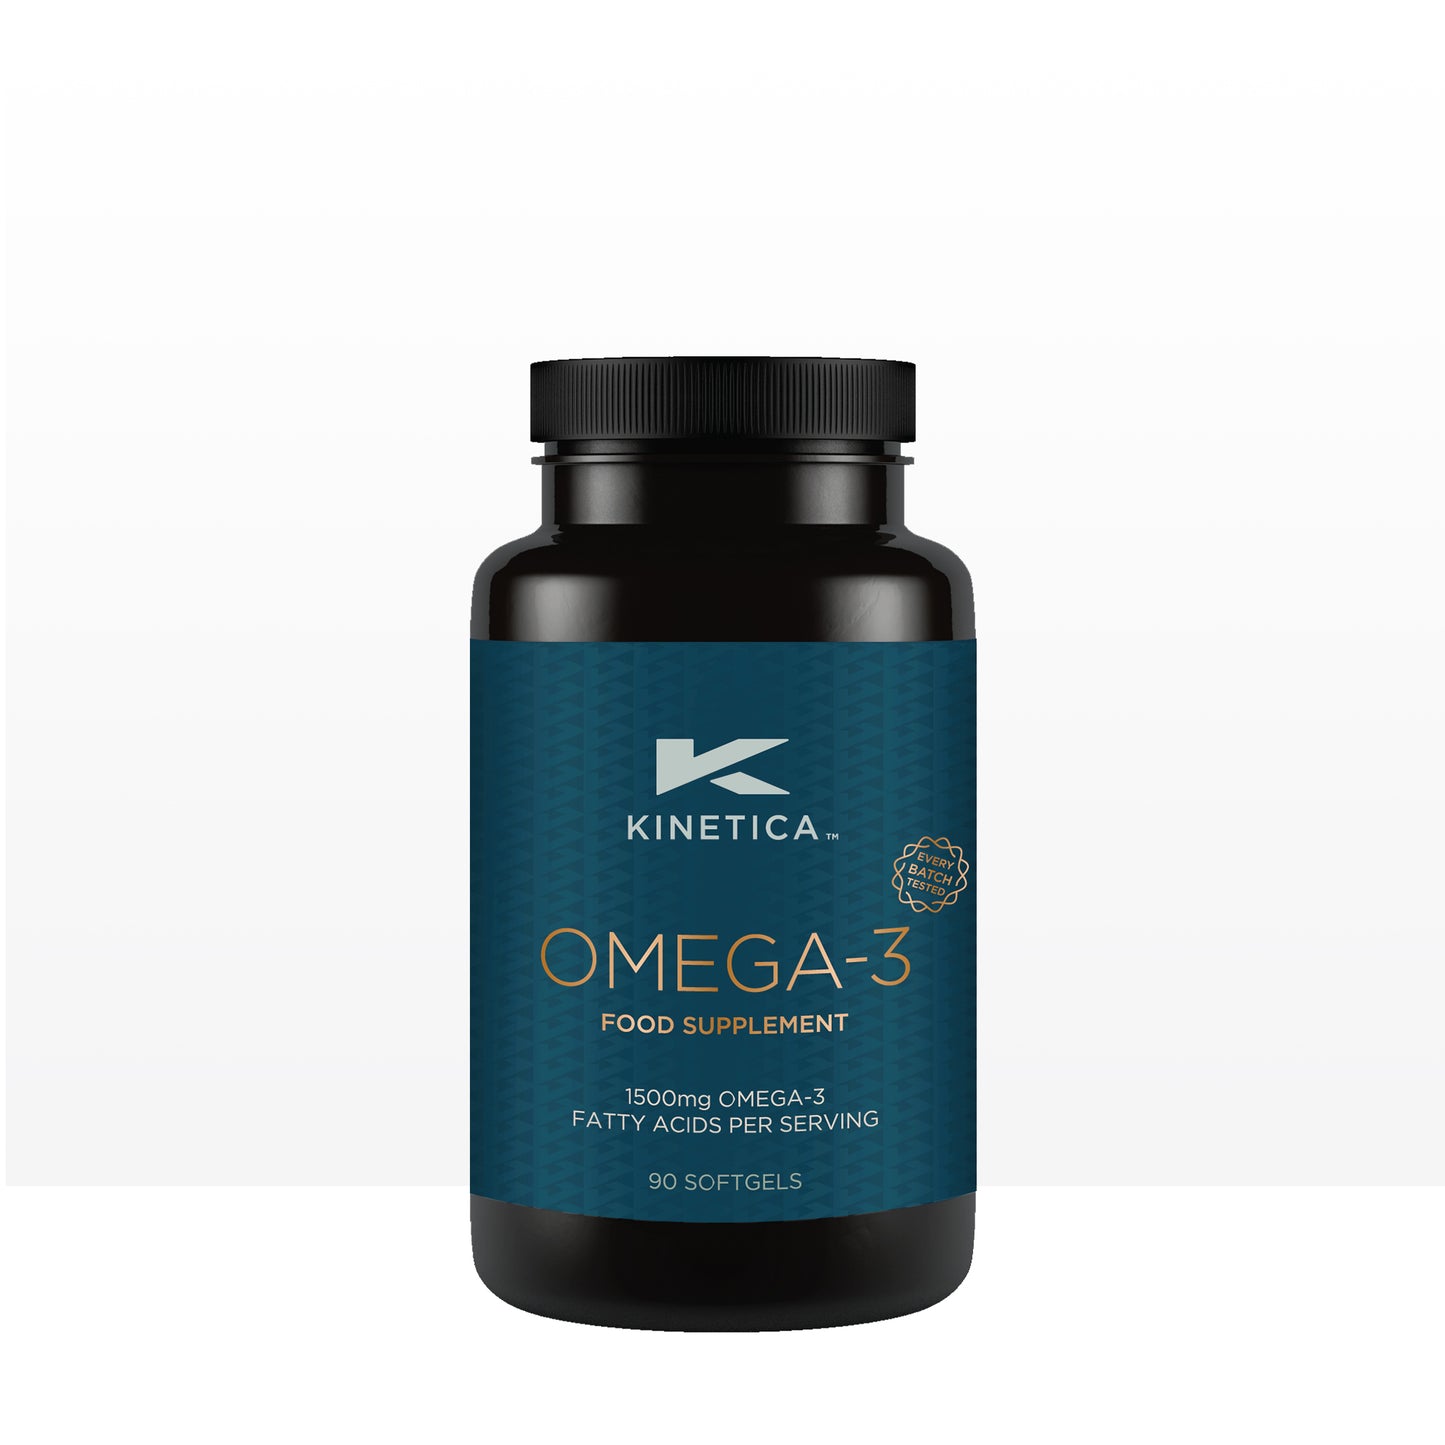 Omega-3 Fish Oil - 90 Capsules